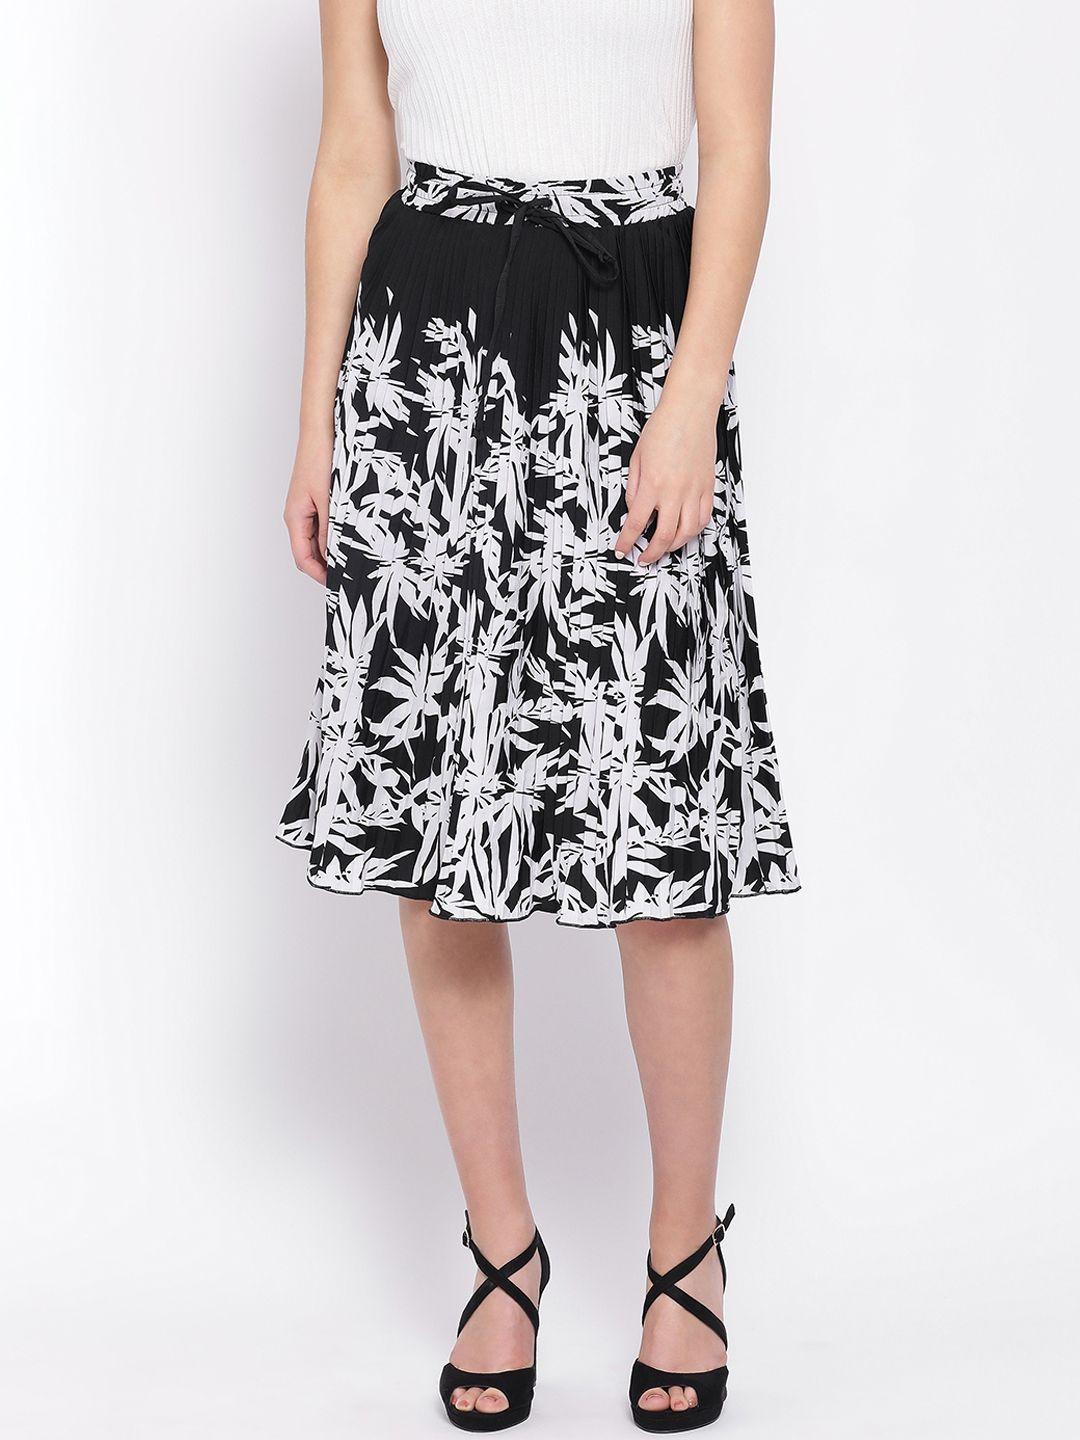 oxolloxo women black & white floral-printed a-line midi skirt